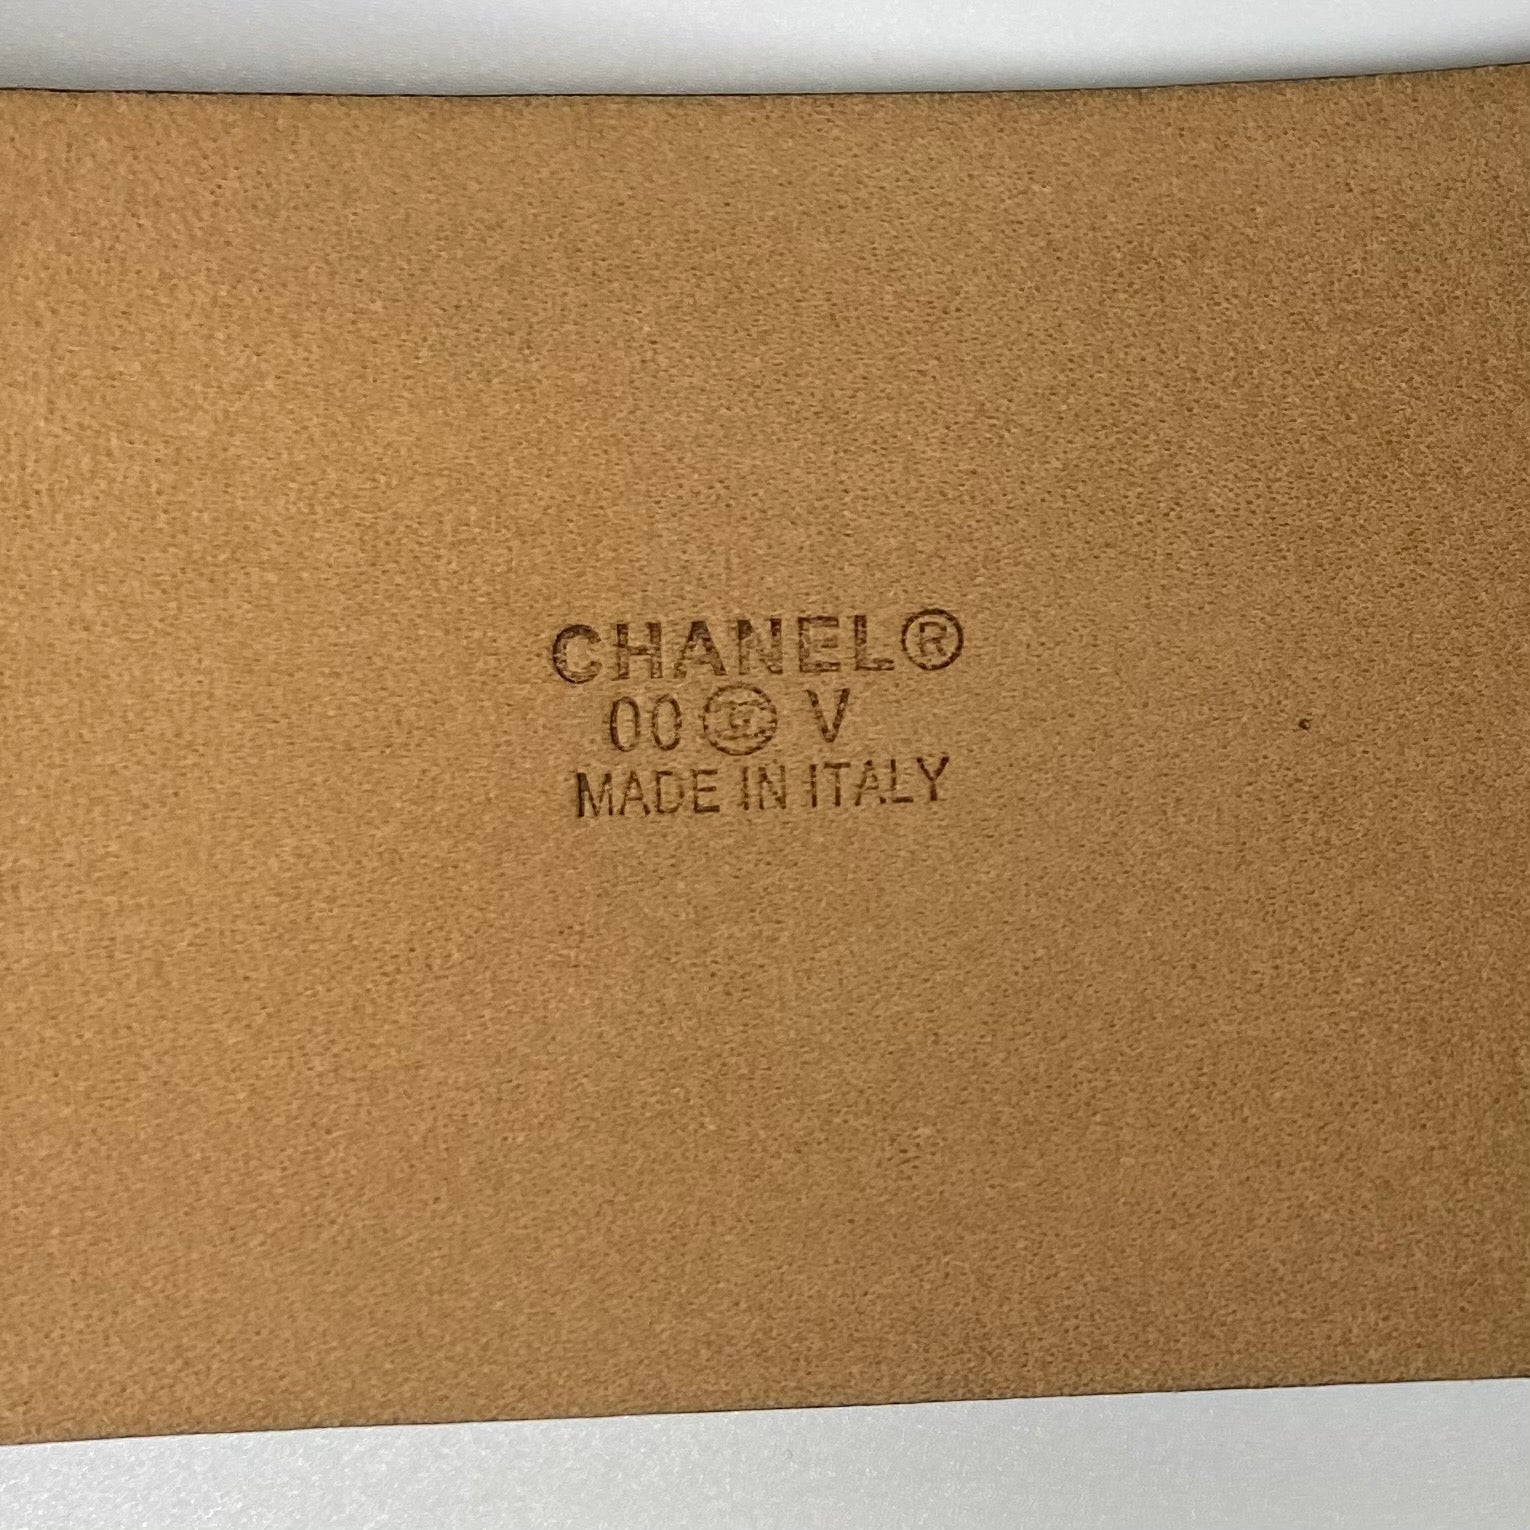 Chanel Silver CC Belt